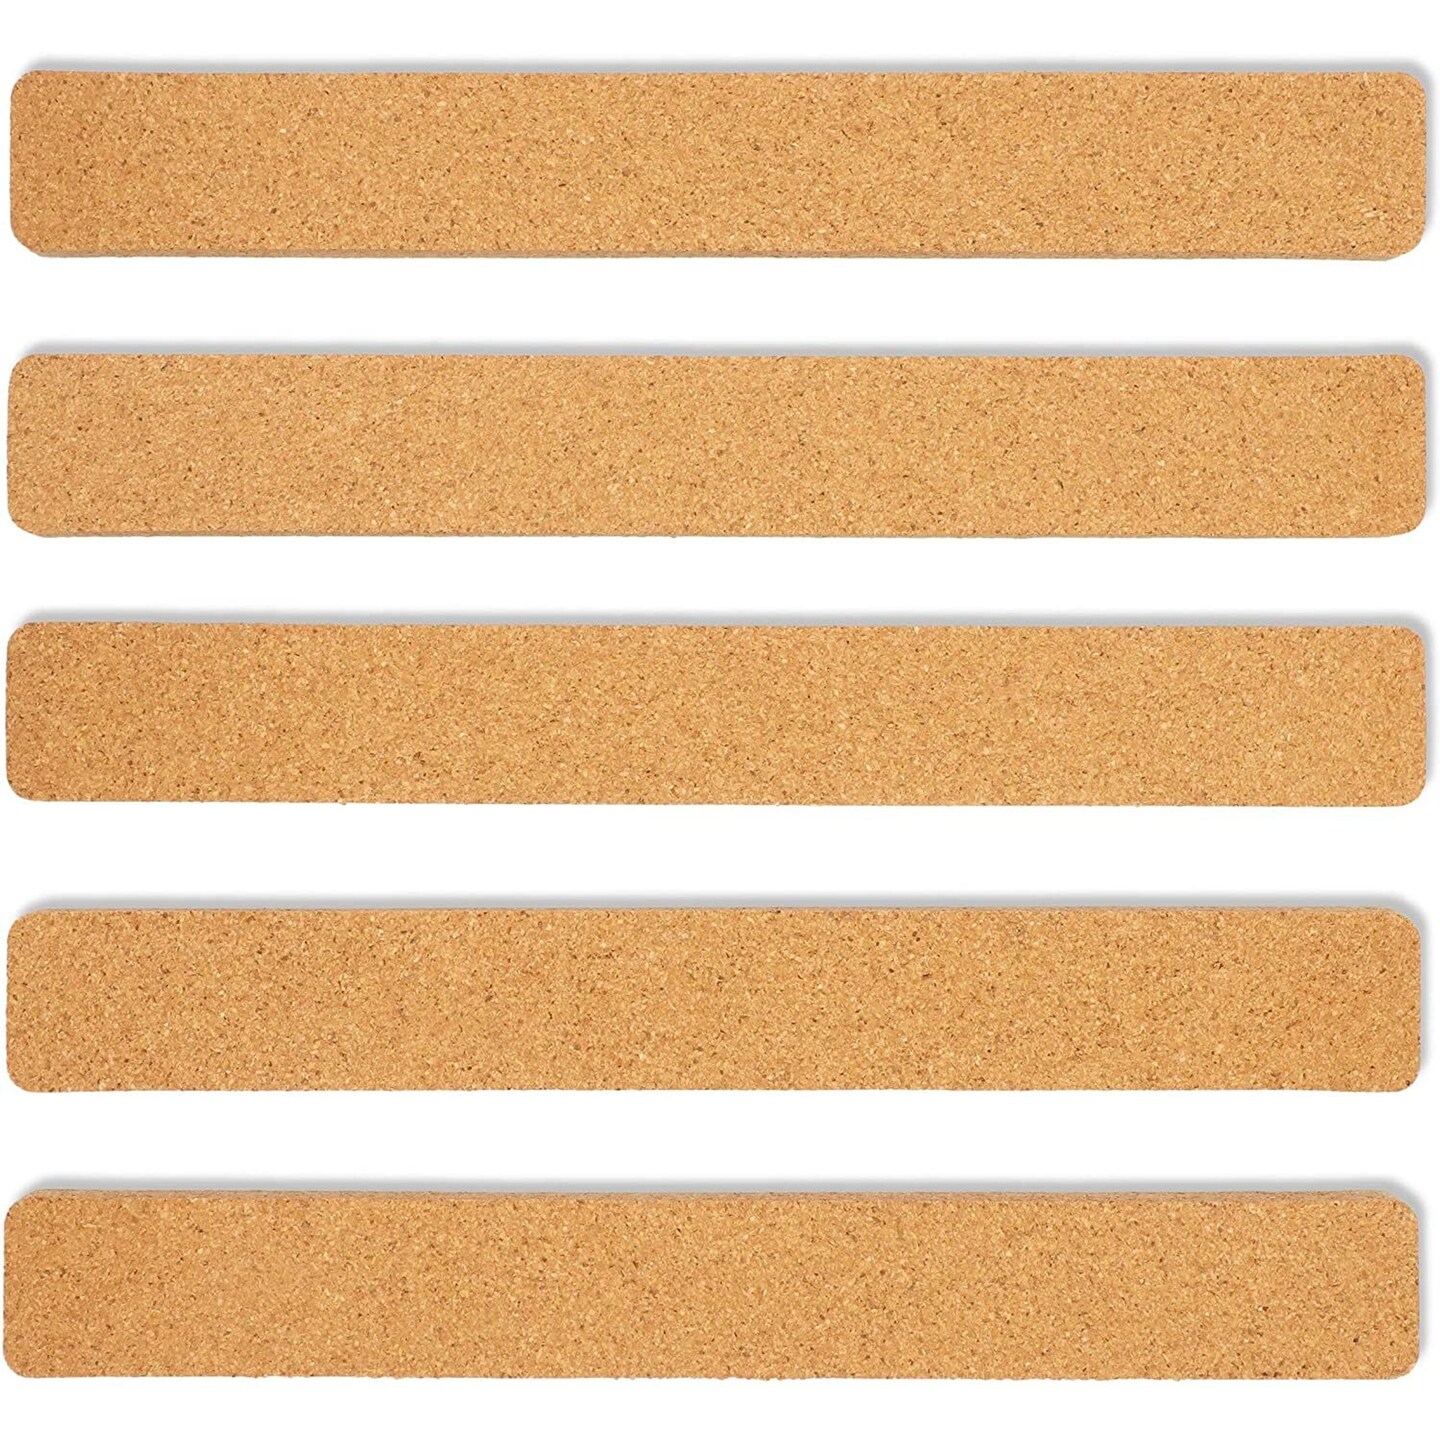 FEBSNOW 3 Pcs Bulletin Strip Cork Strip Cork Bulletin Bar Strip Natural Frameless Cork Board Strips with Strength Adhesive Backing for O